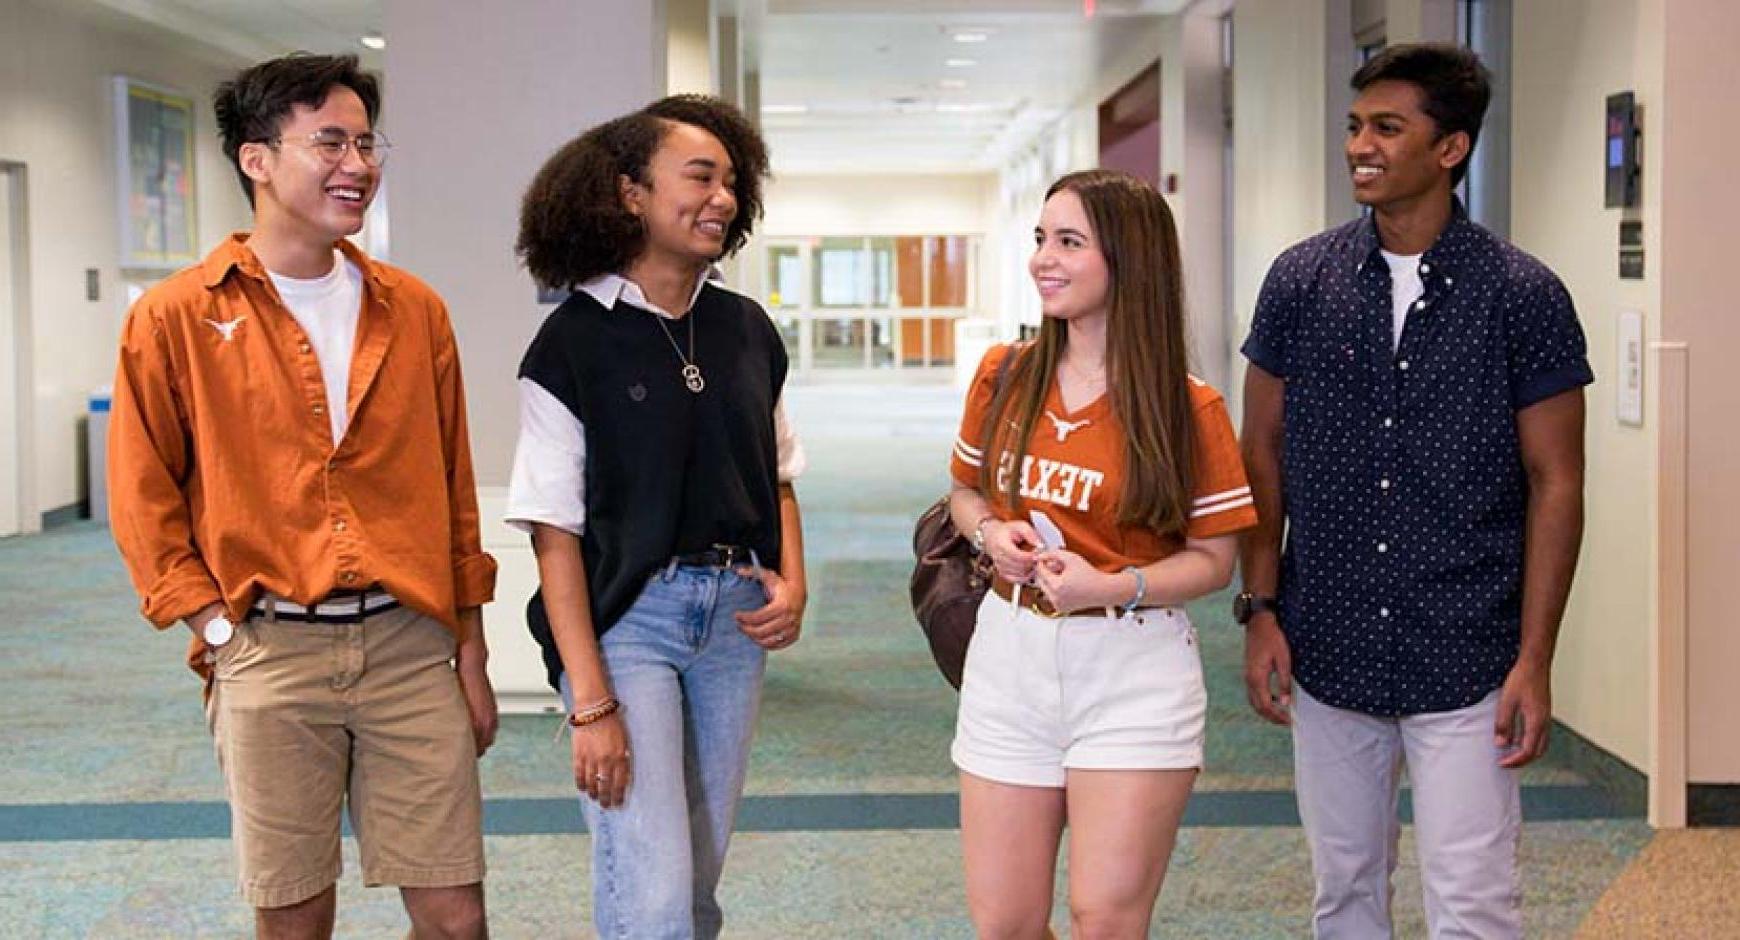 Students talking in a dorm hallway